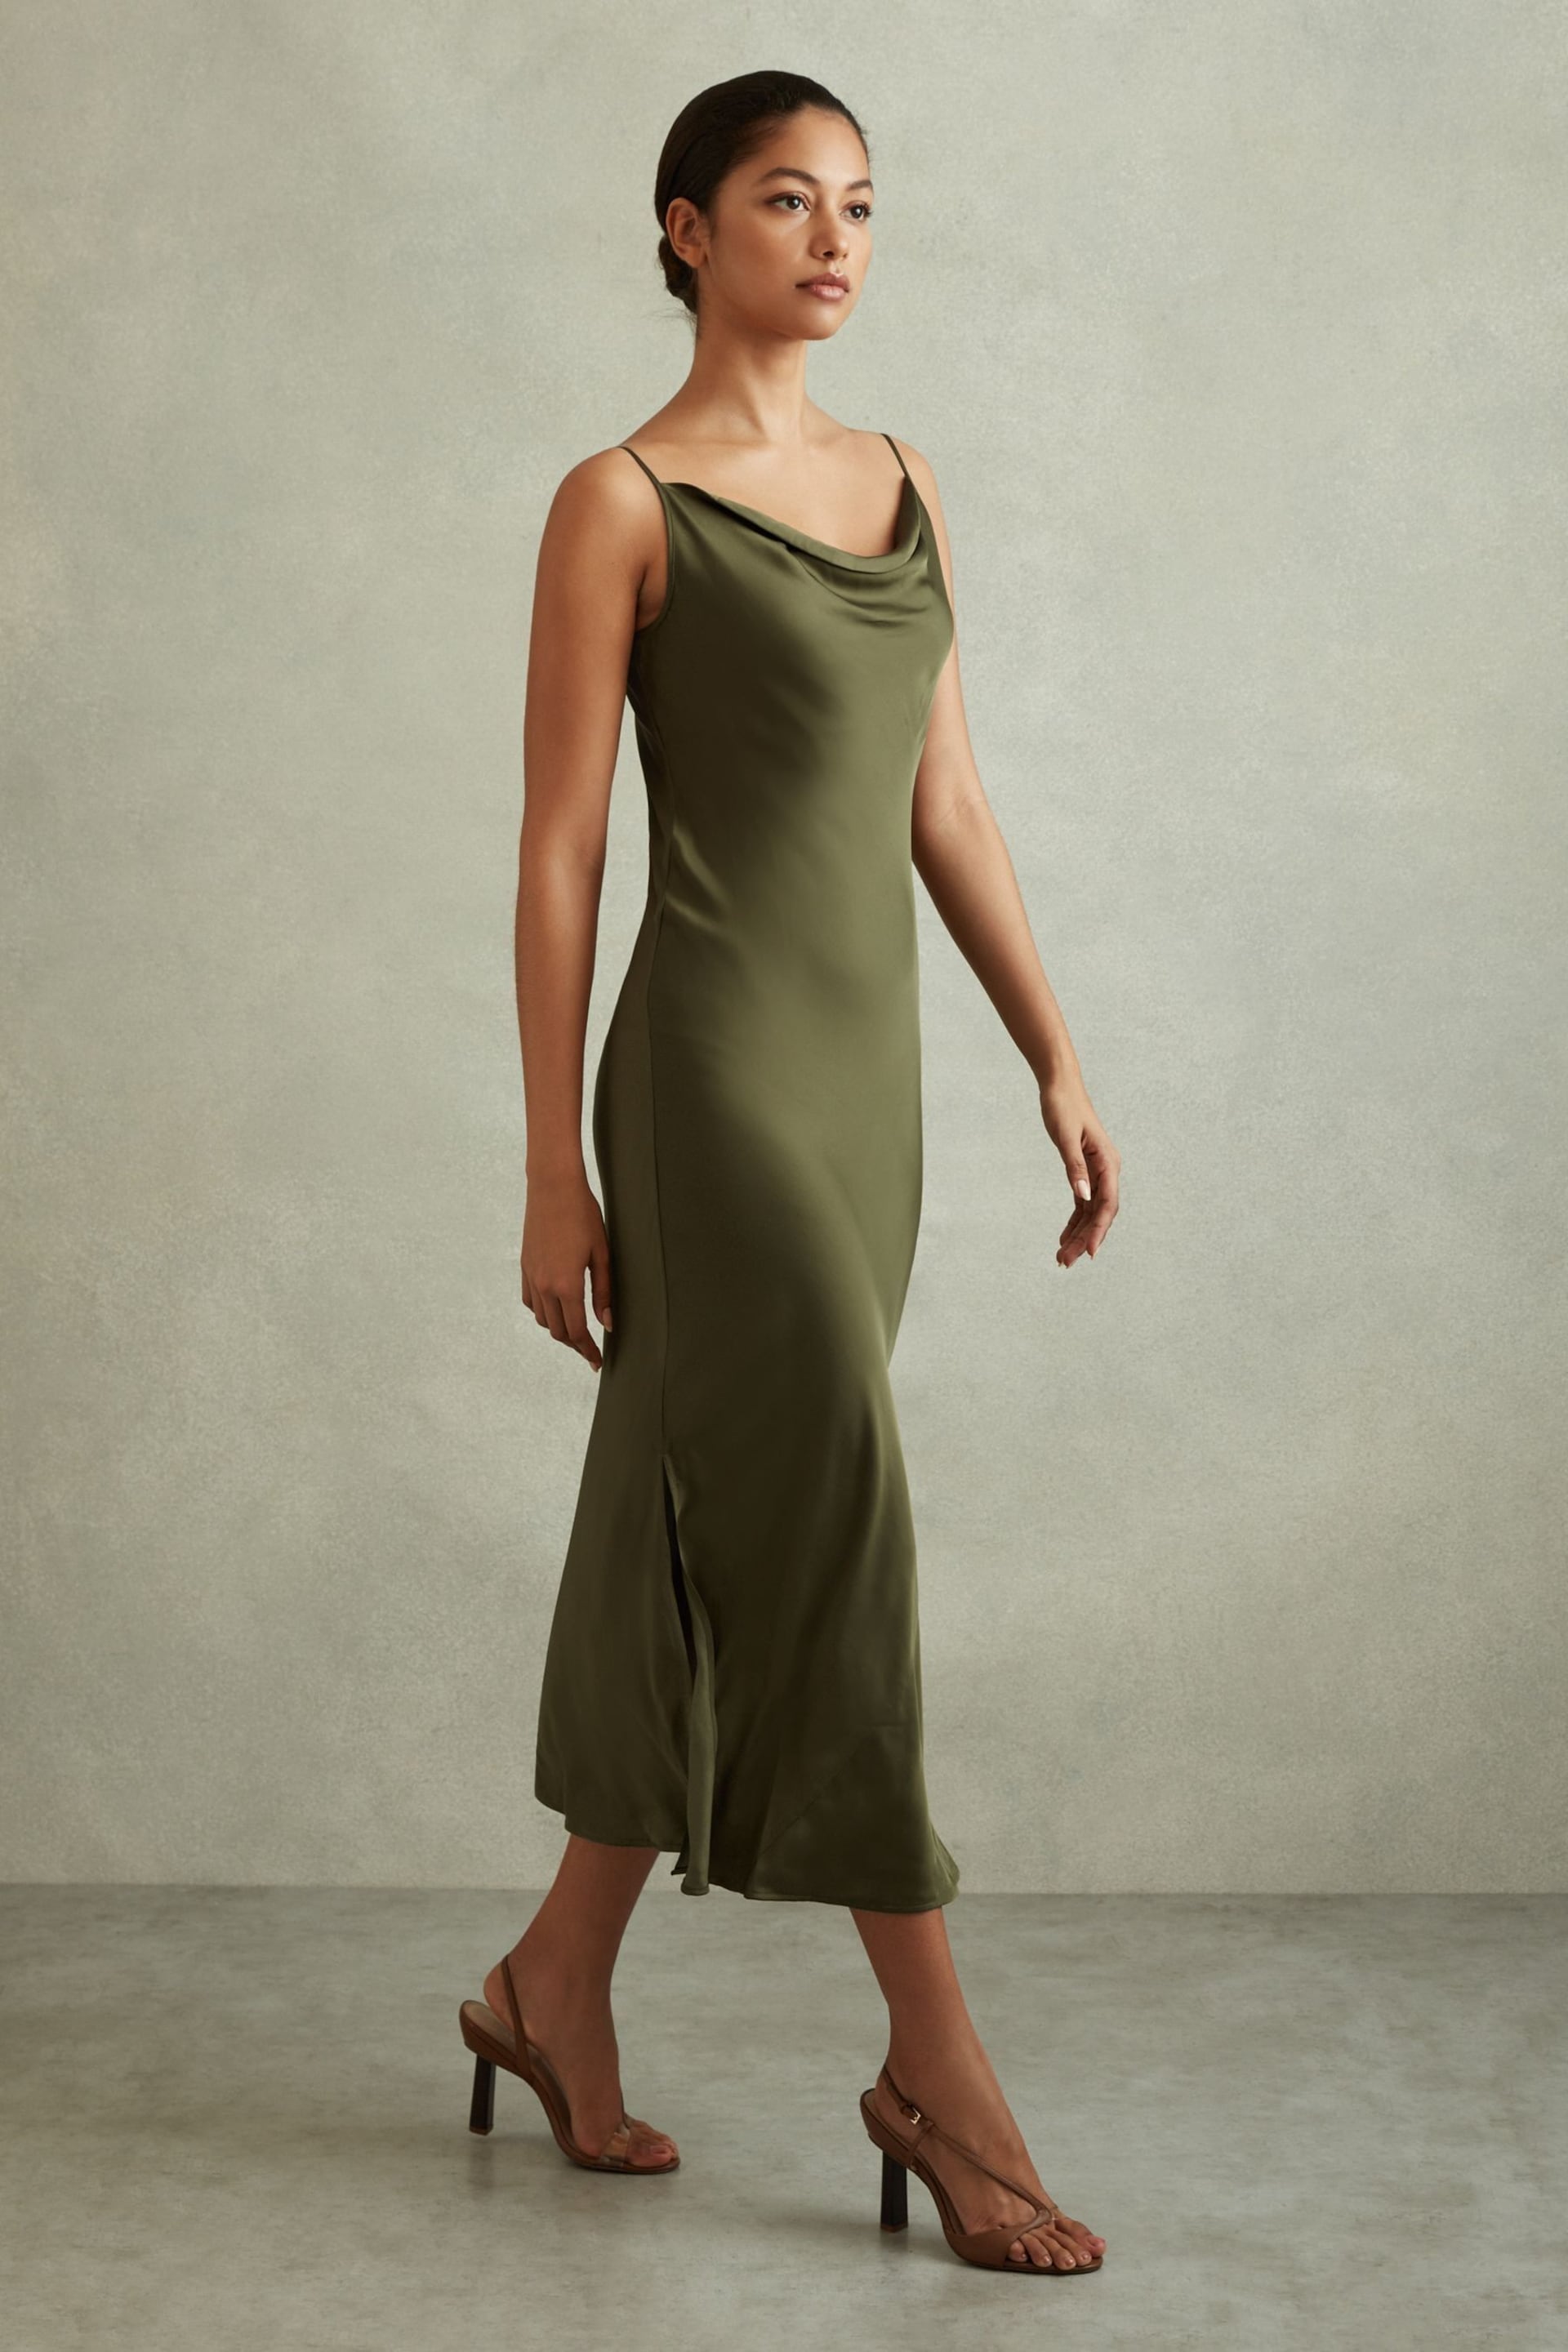 Reiss Khaki Isabel Satin Cowl Neck Midi Dress - Image 1 of 5